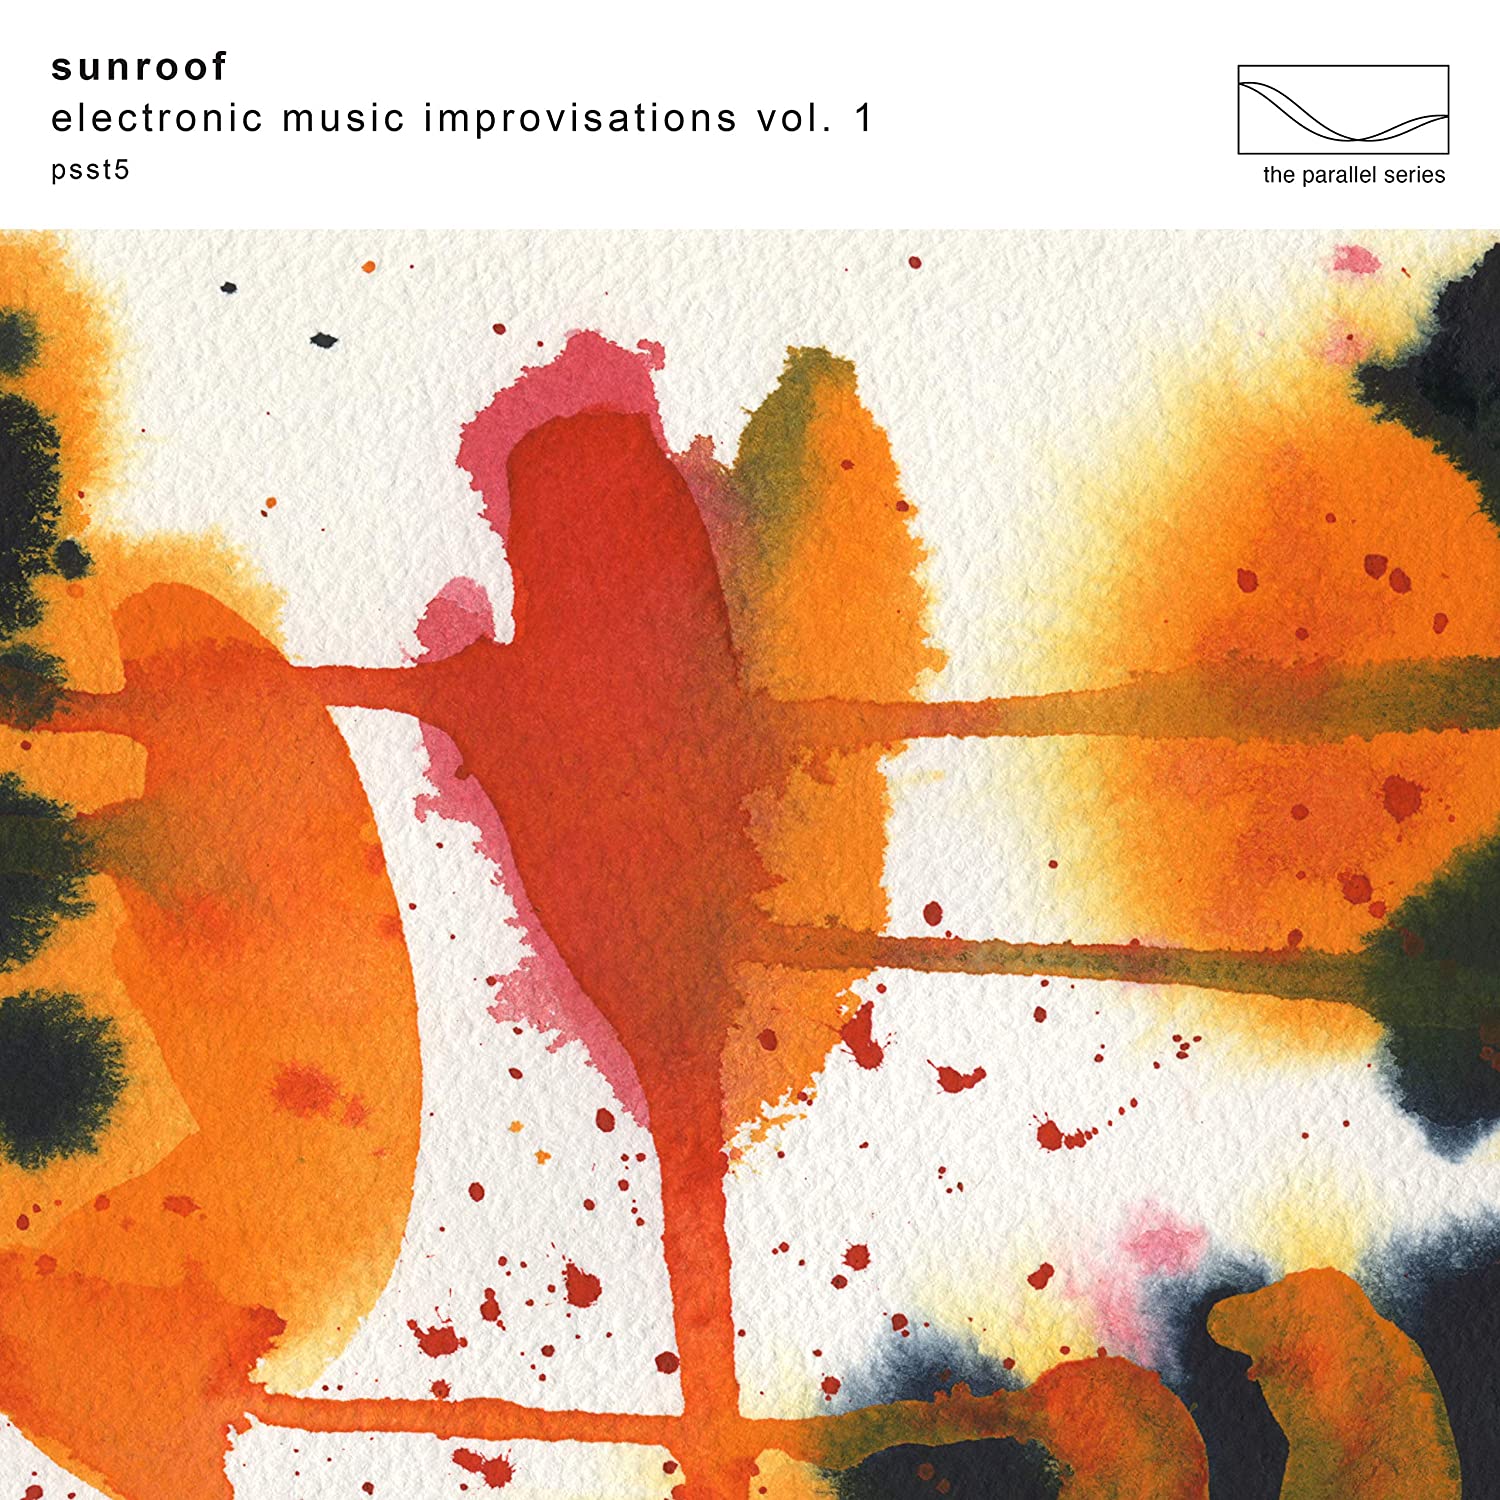 Sunroof Electronic Music Improvisations Vol. 1 Vinyl LP